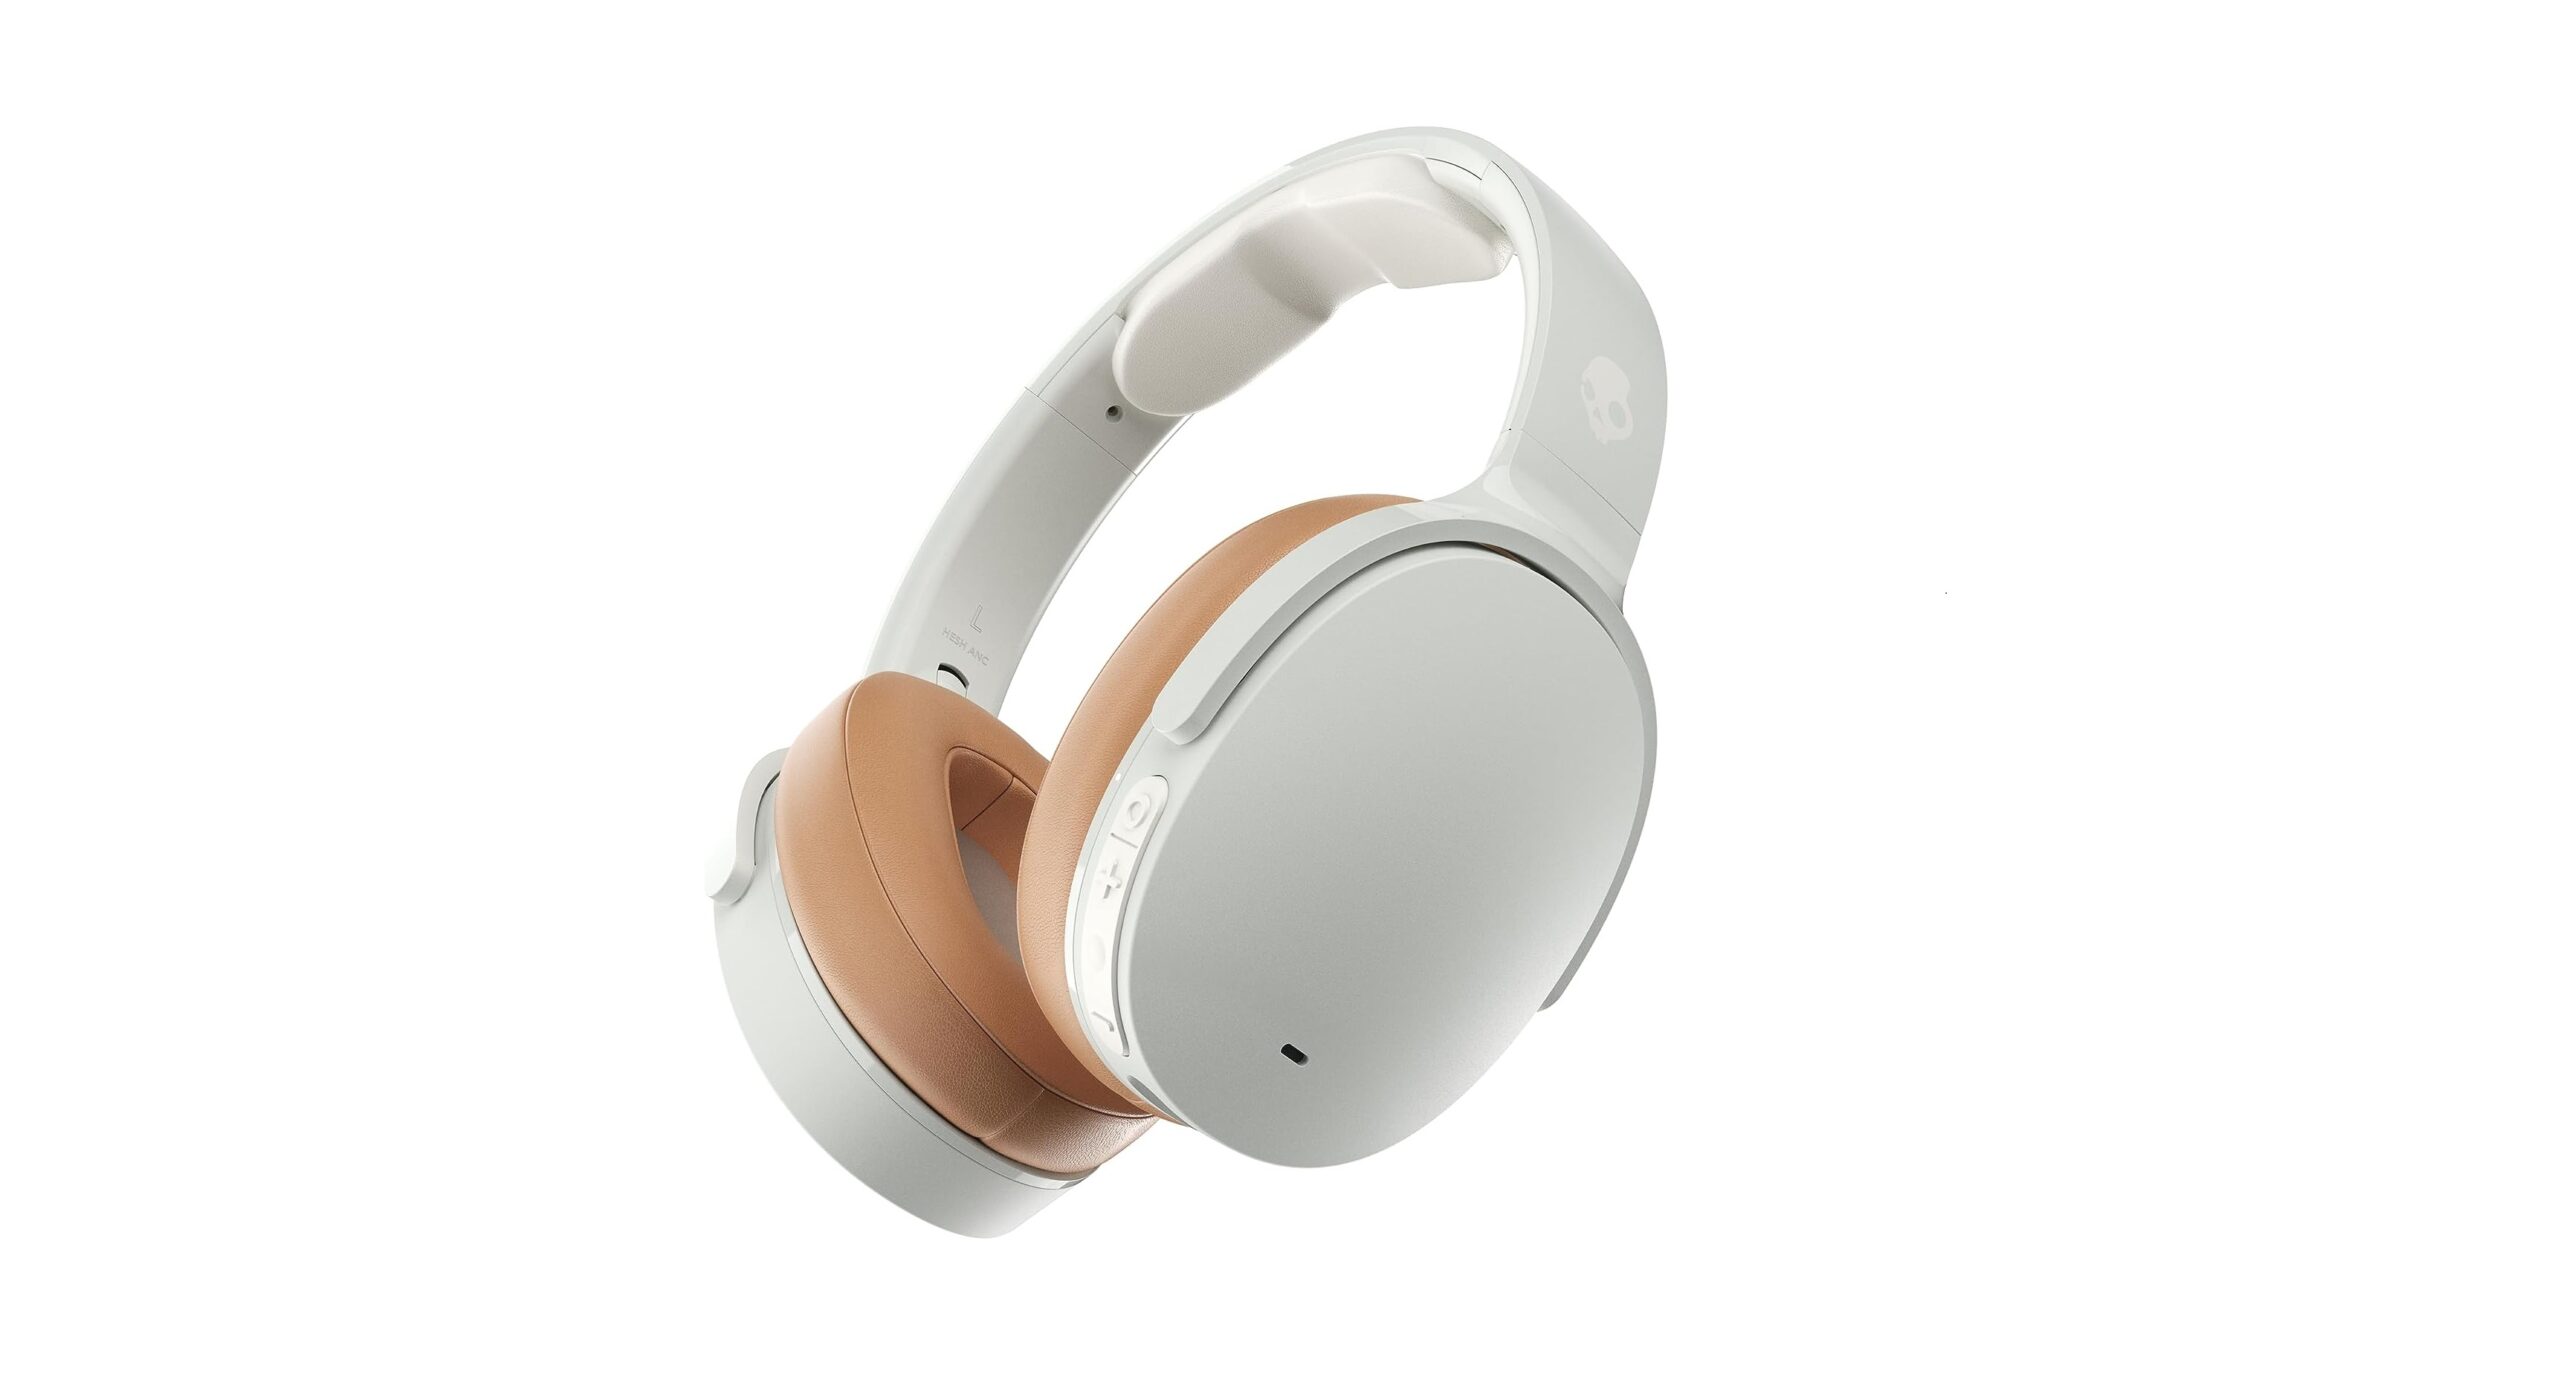 SkullCandy Wireless Headphones - An Outstanding Christmas Gift Idea for Teenager Boys